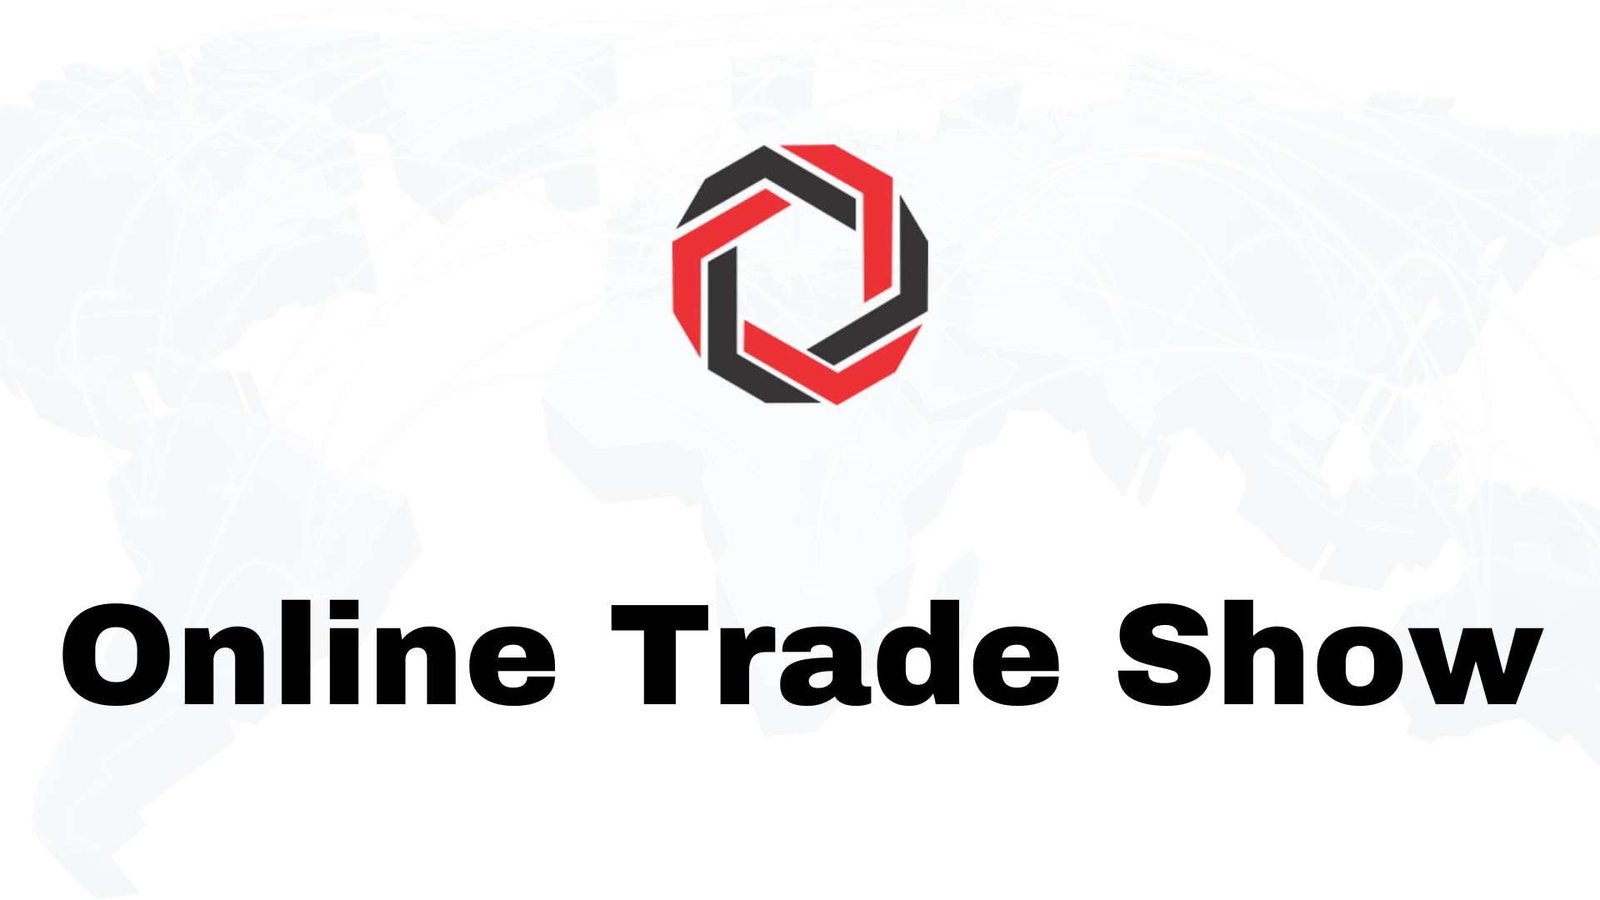 Online Trade Show